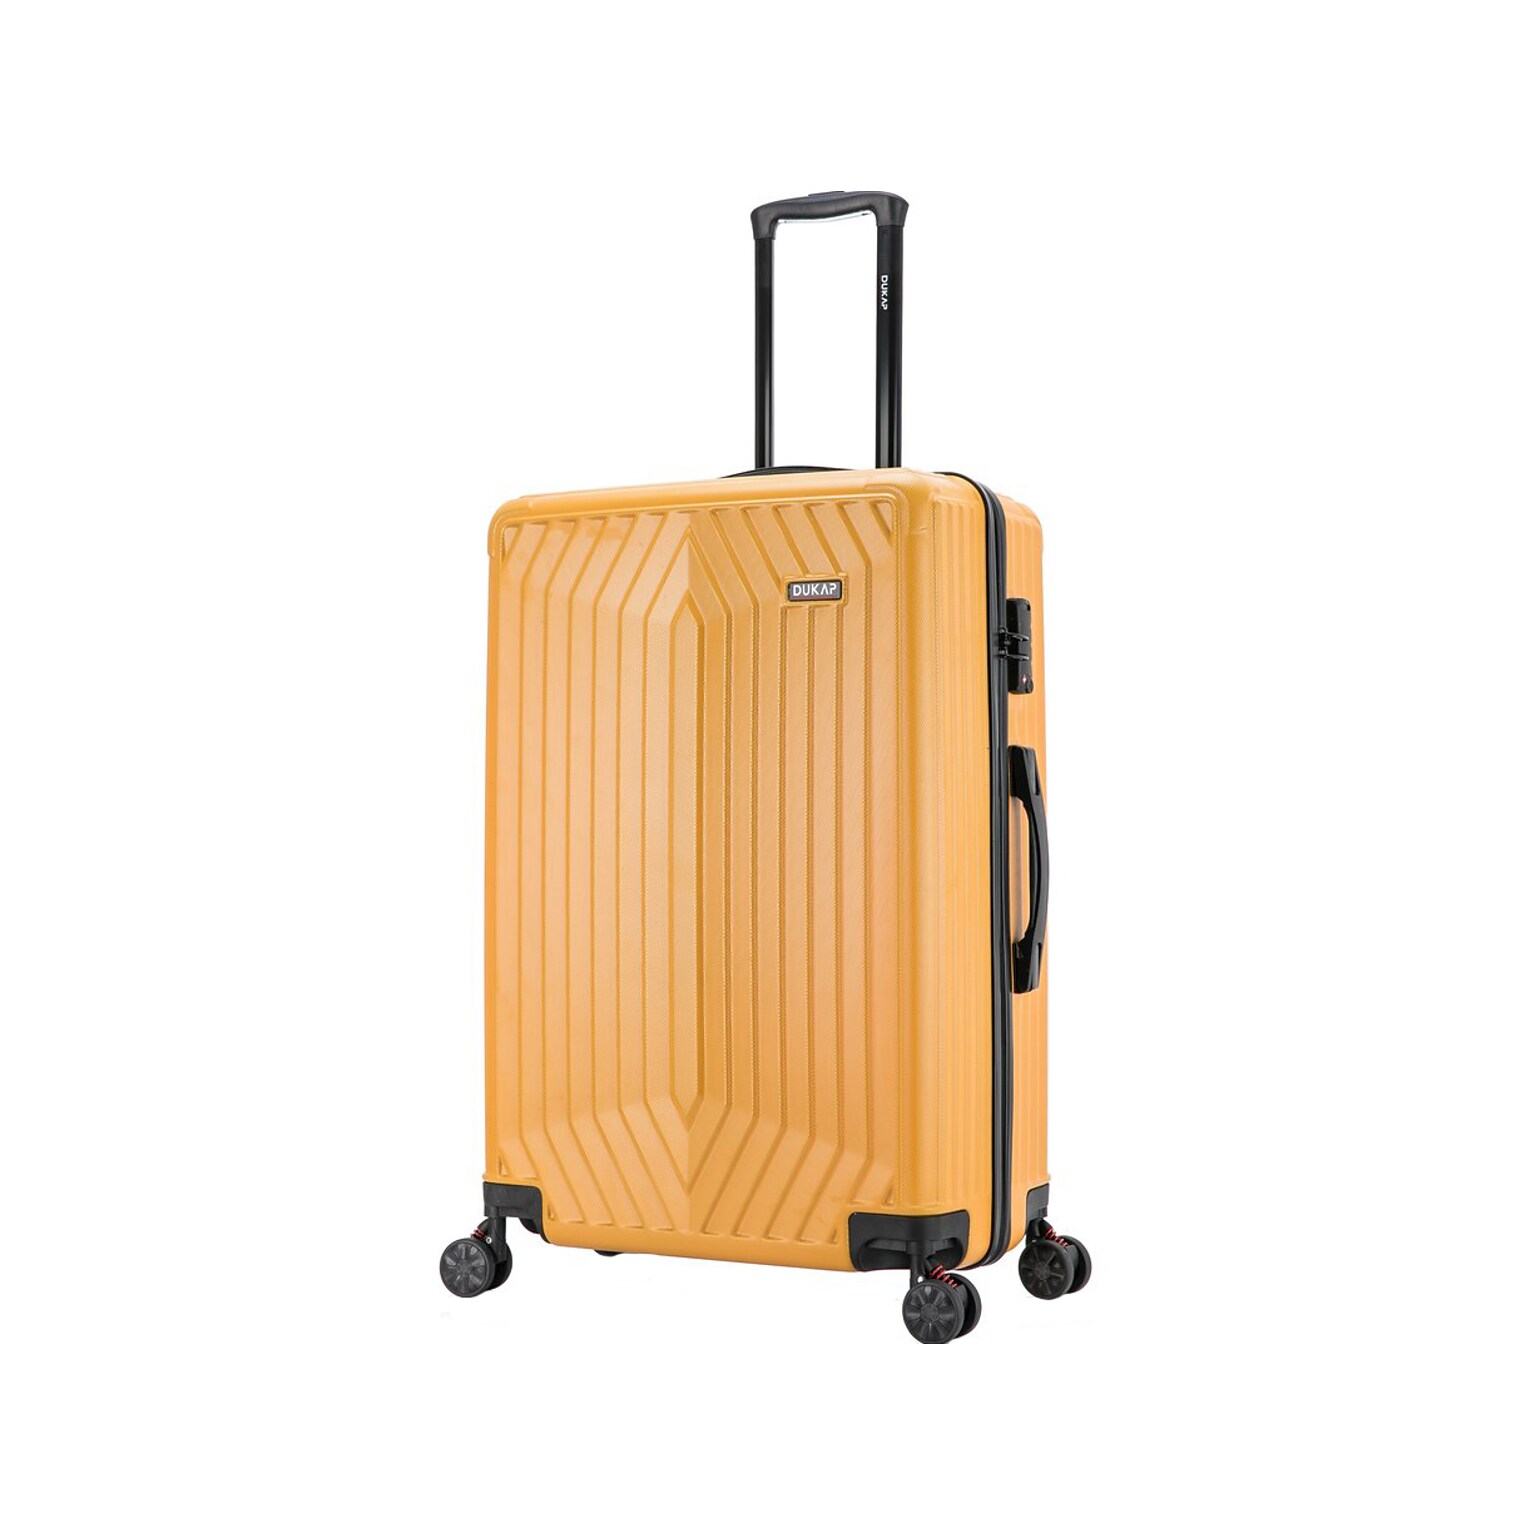 DUKAP Stratos 29.23 Hardside Suitcase, 4-Wheeled Spinner, TSA Checkpoint Friendly, Terracota (DKSTR00L-TER)